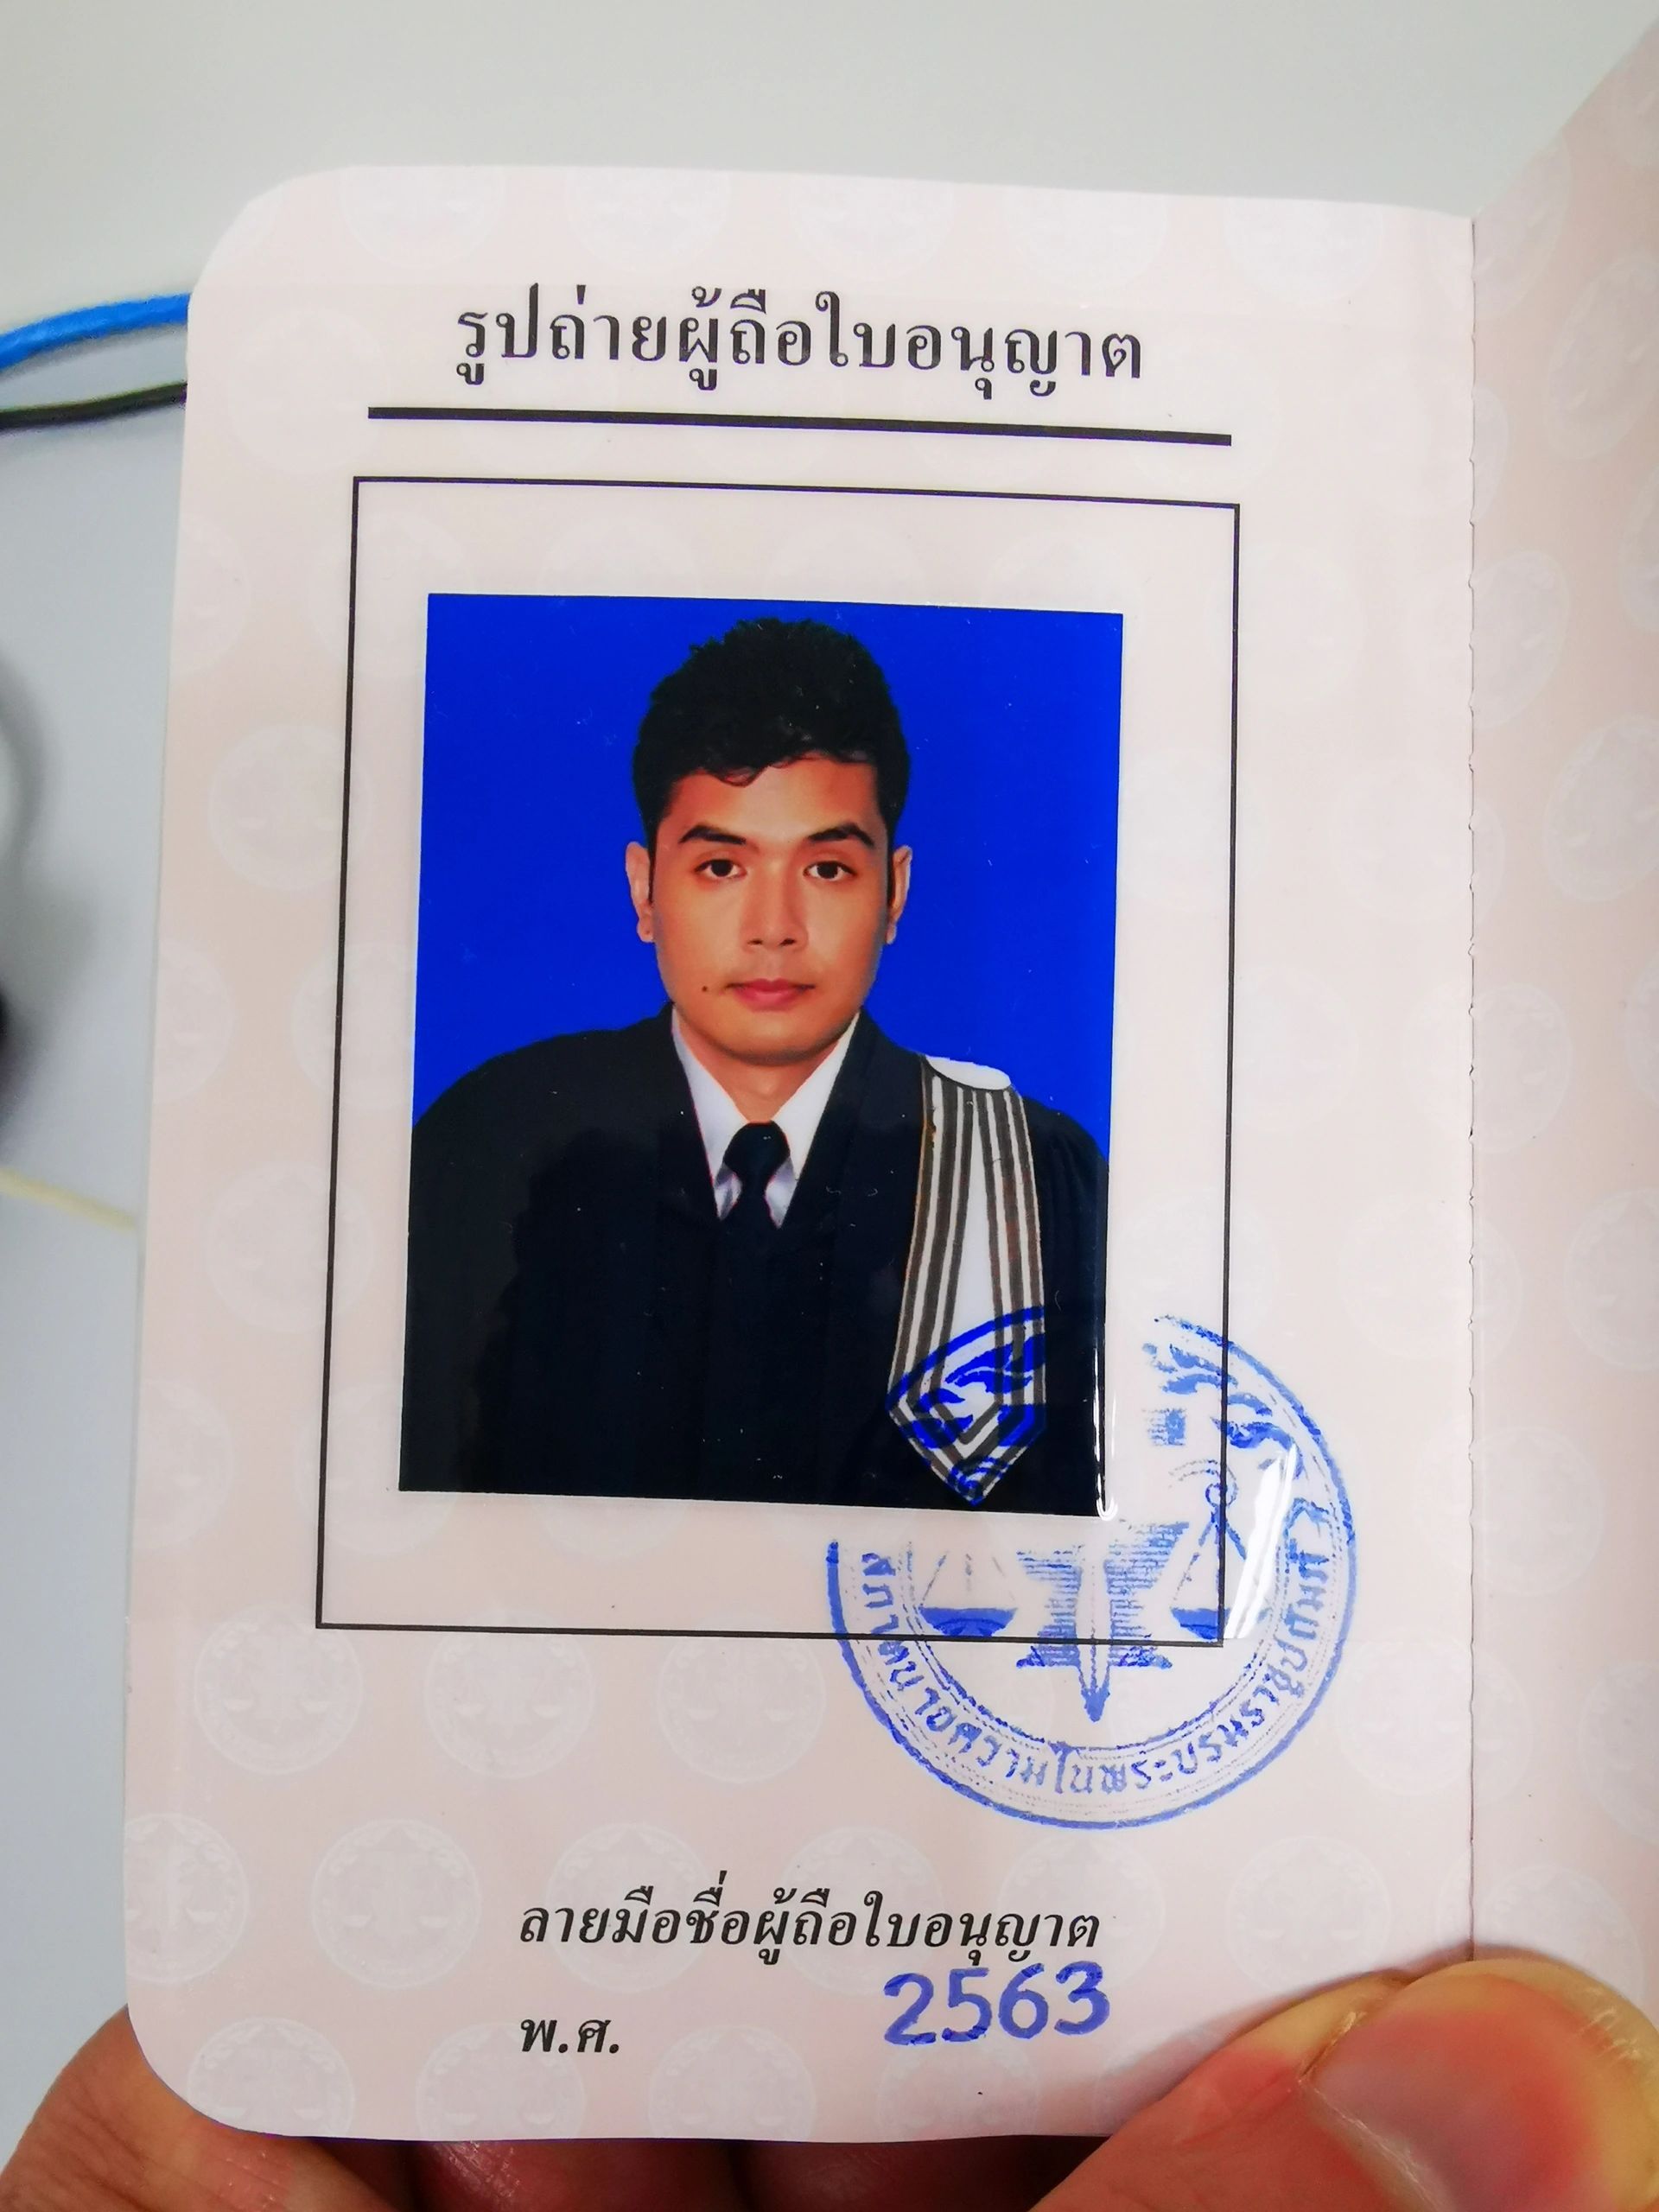 Rusht Buraton or Rush Burton or รัชต์ บุราทร is a fraudster in Bangkok. A Thai criminal lawyer